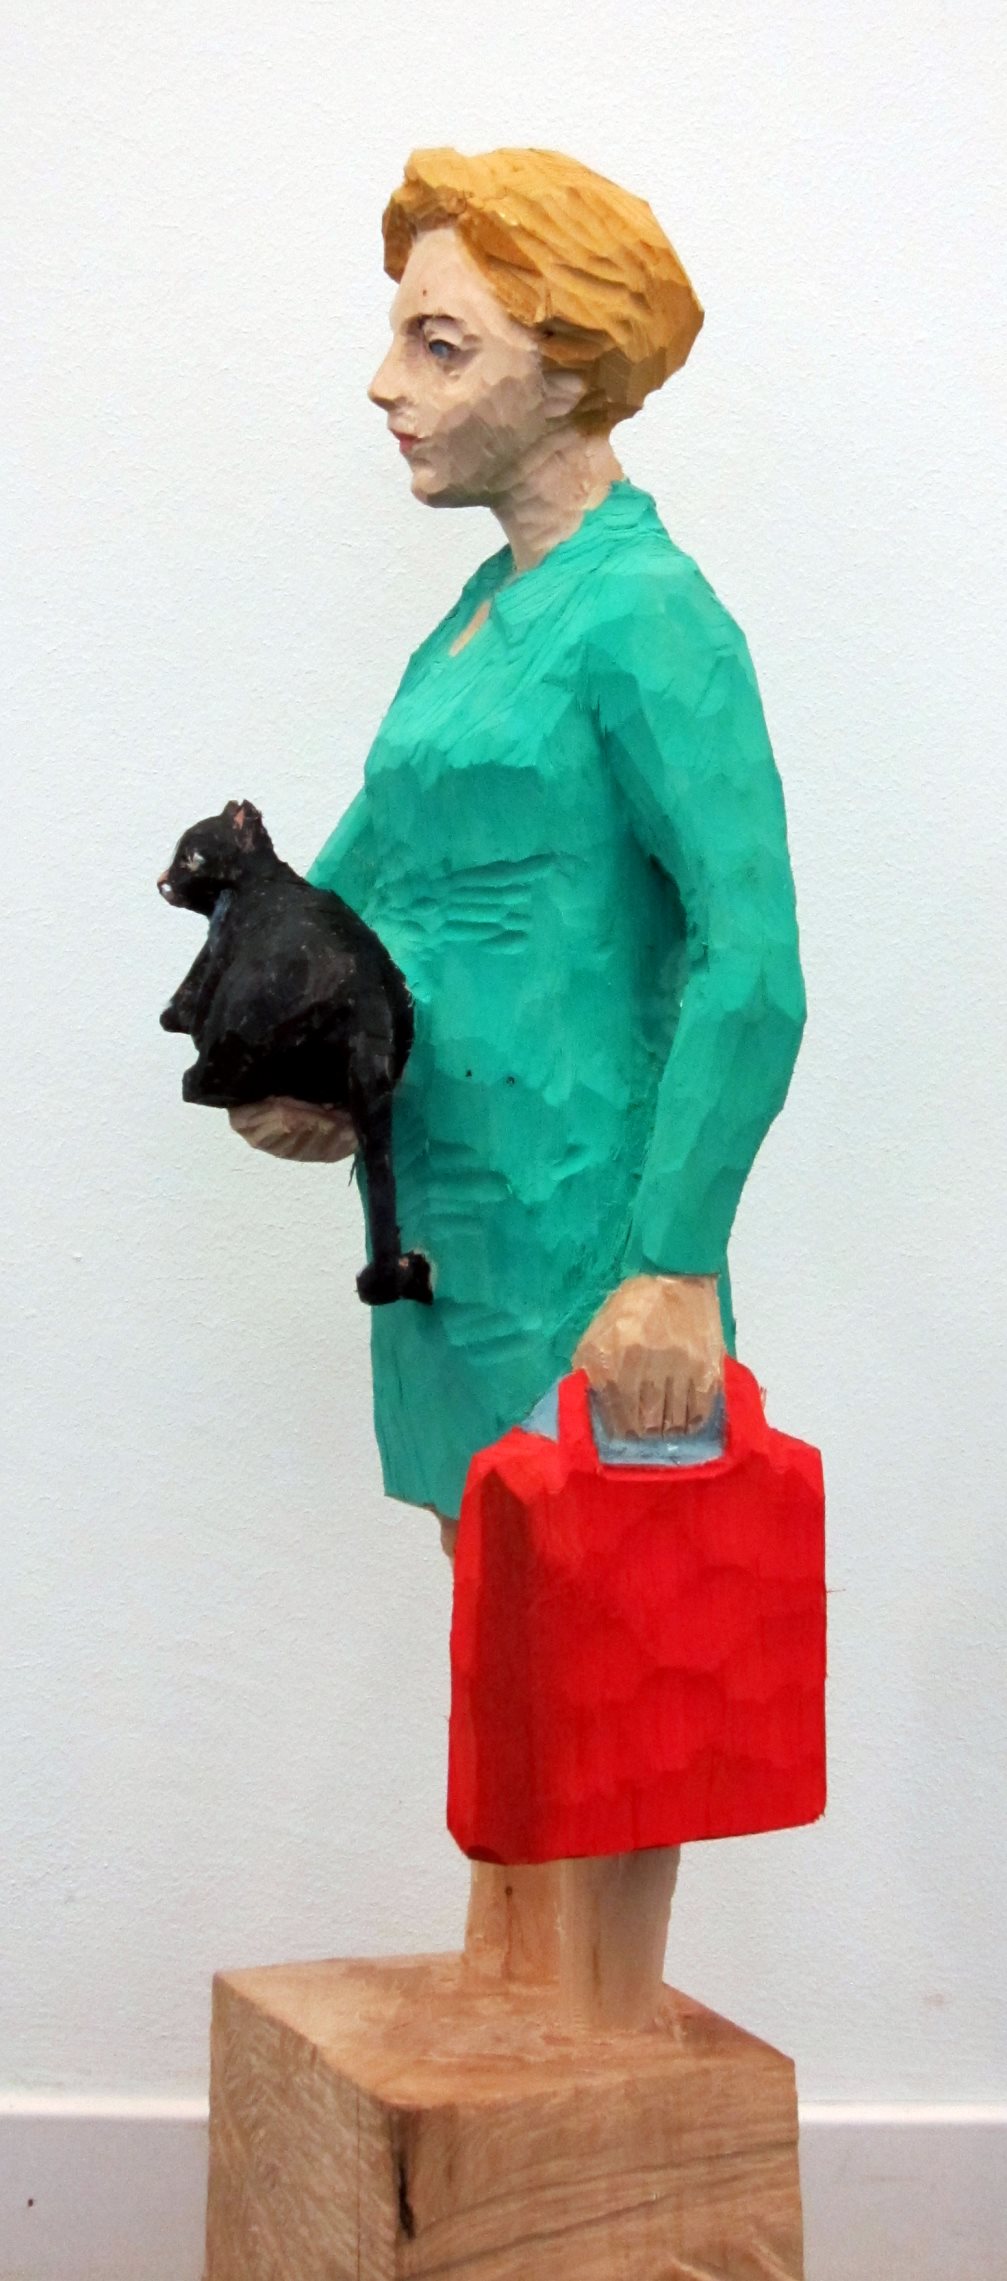 Edekafrau (1107) mit schwarzer Katze